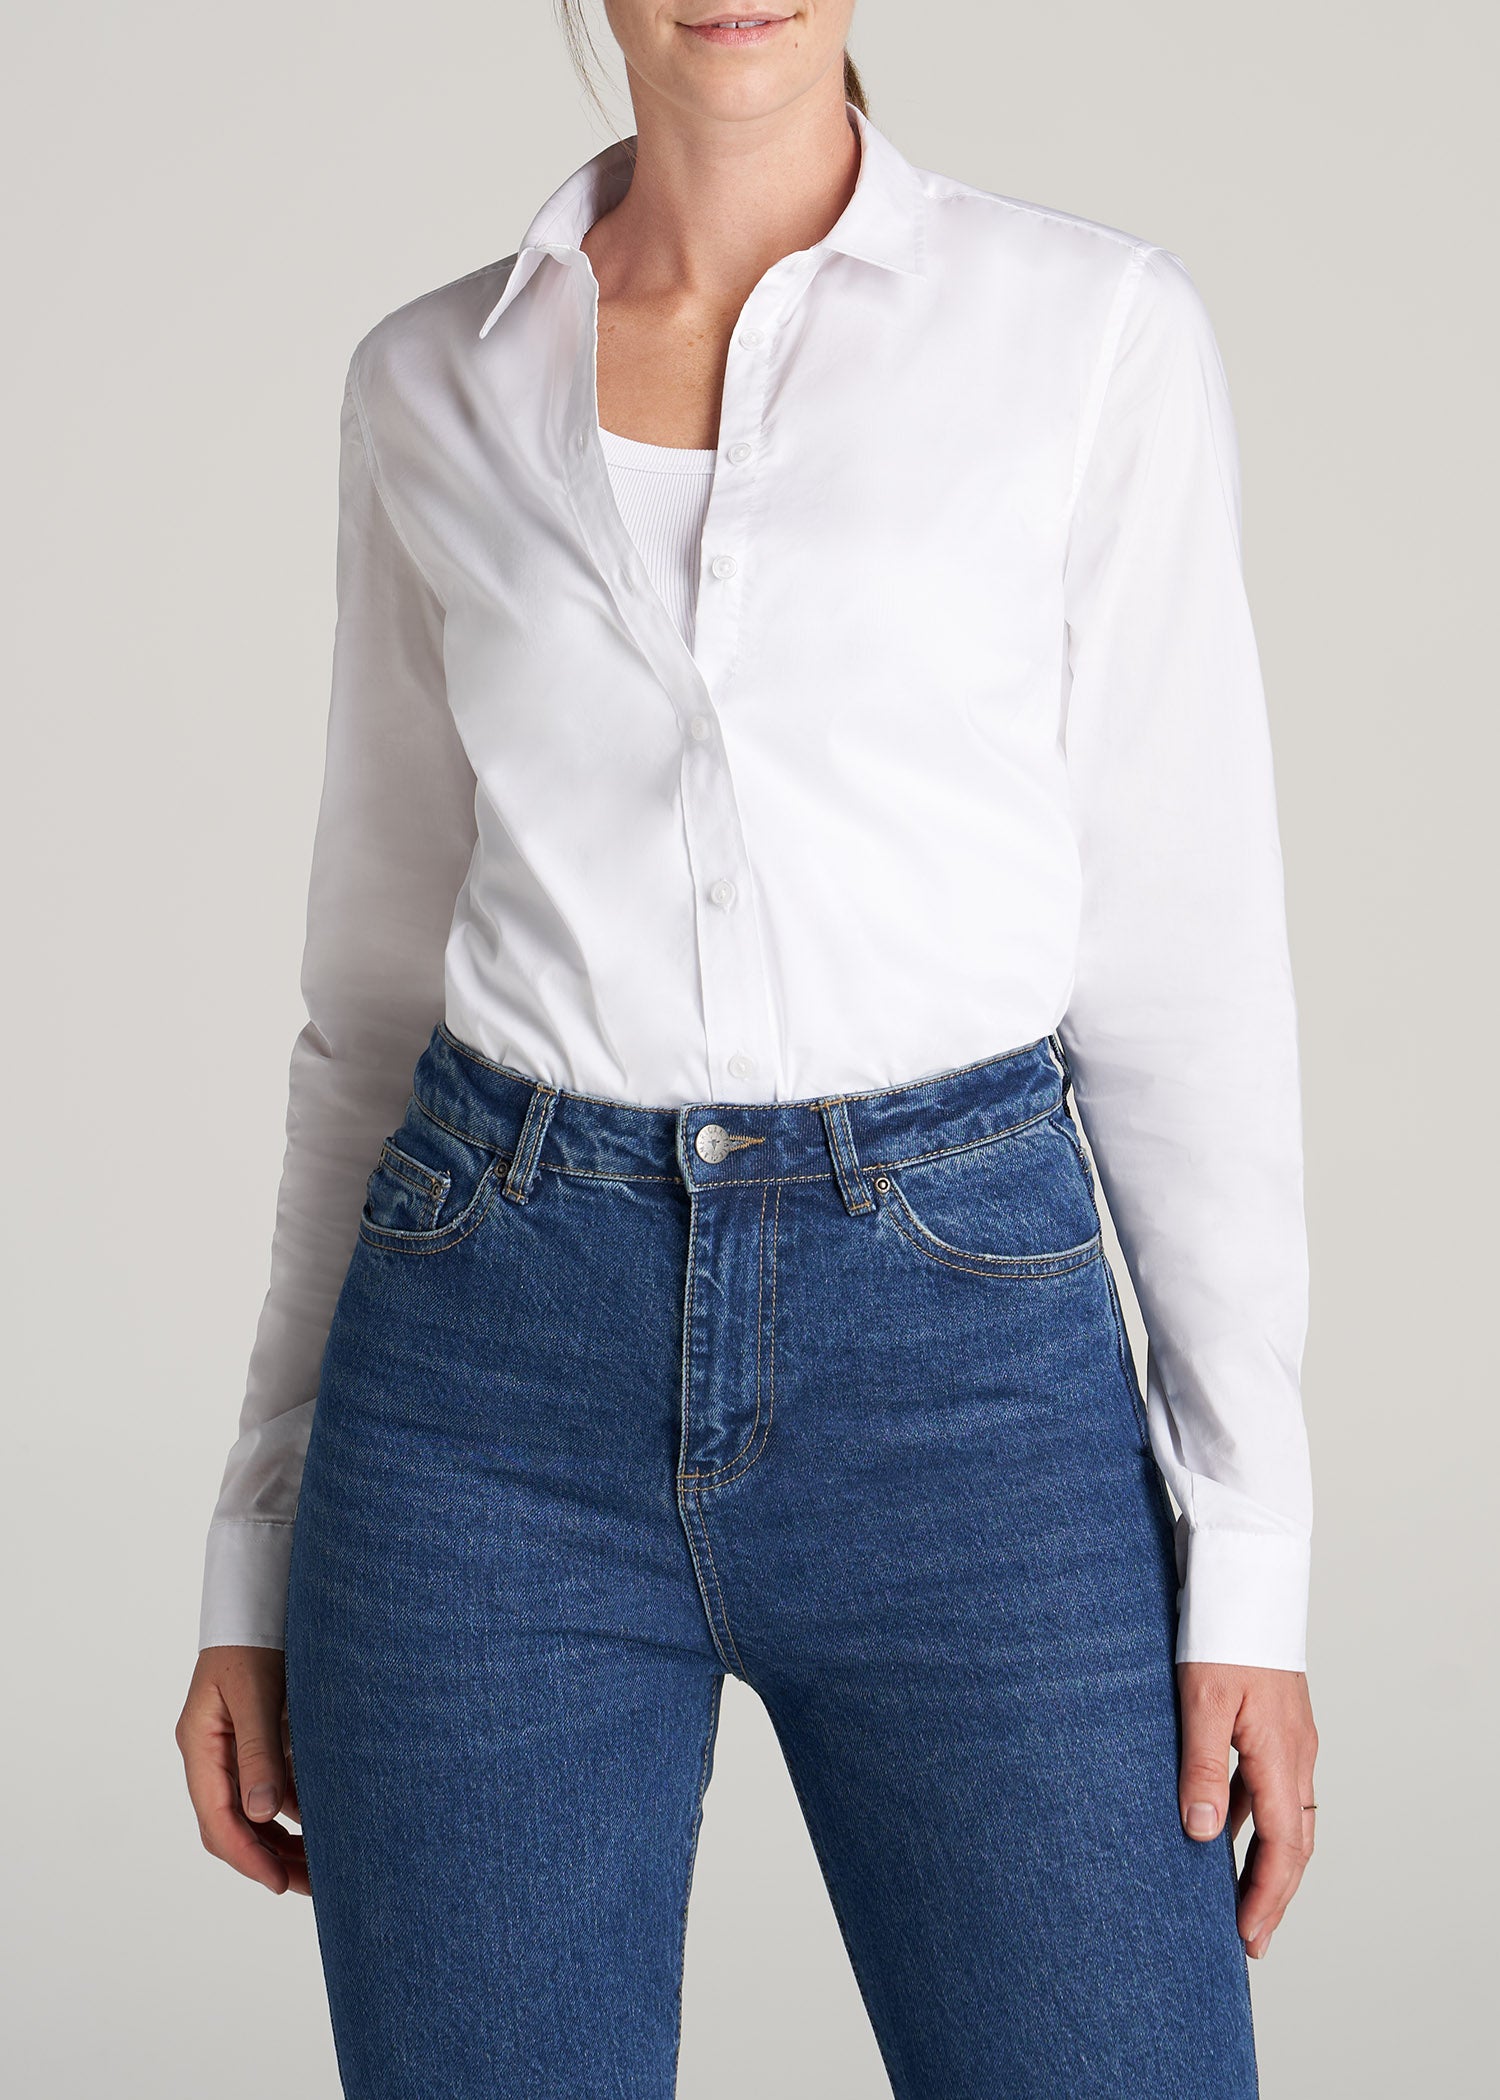       American-Tall-Women-Button-Up-Dress-Shirt-White-front